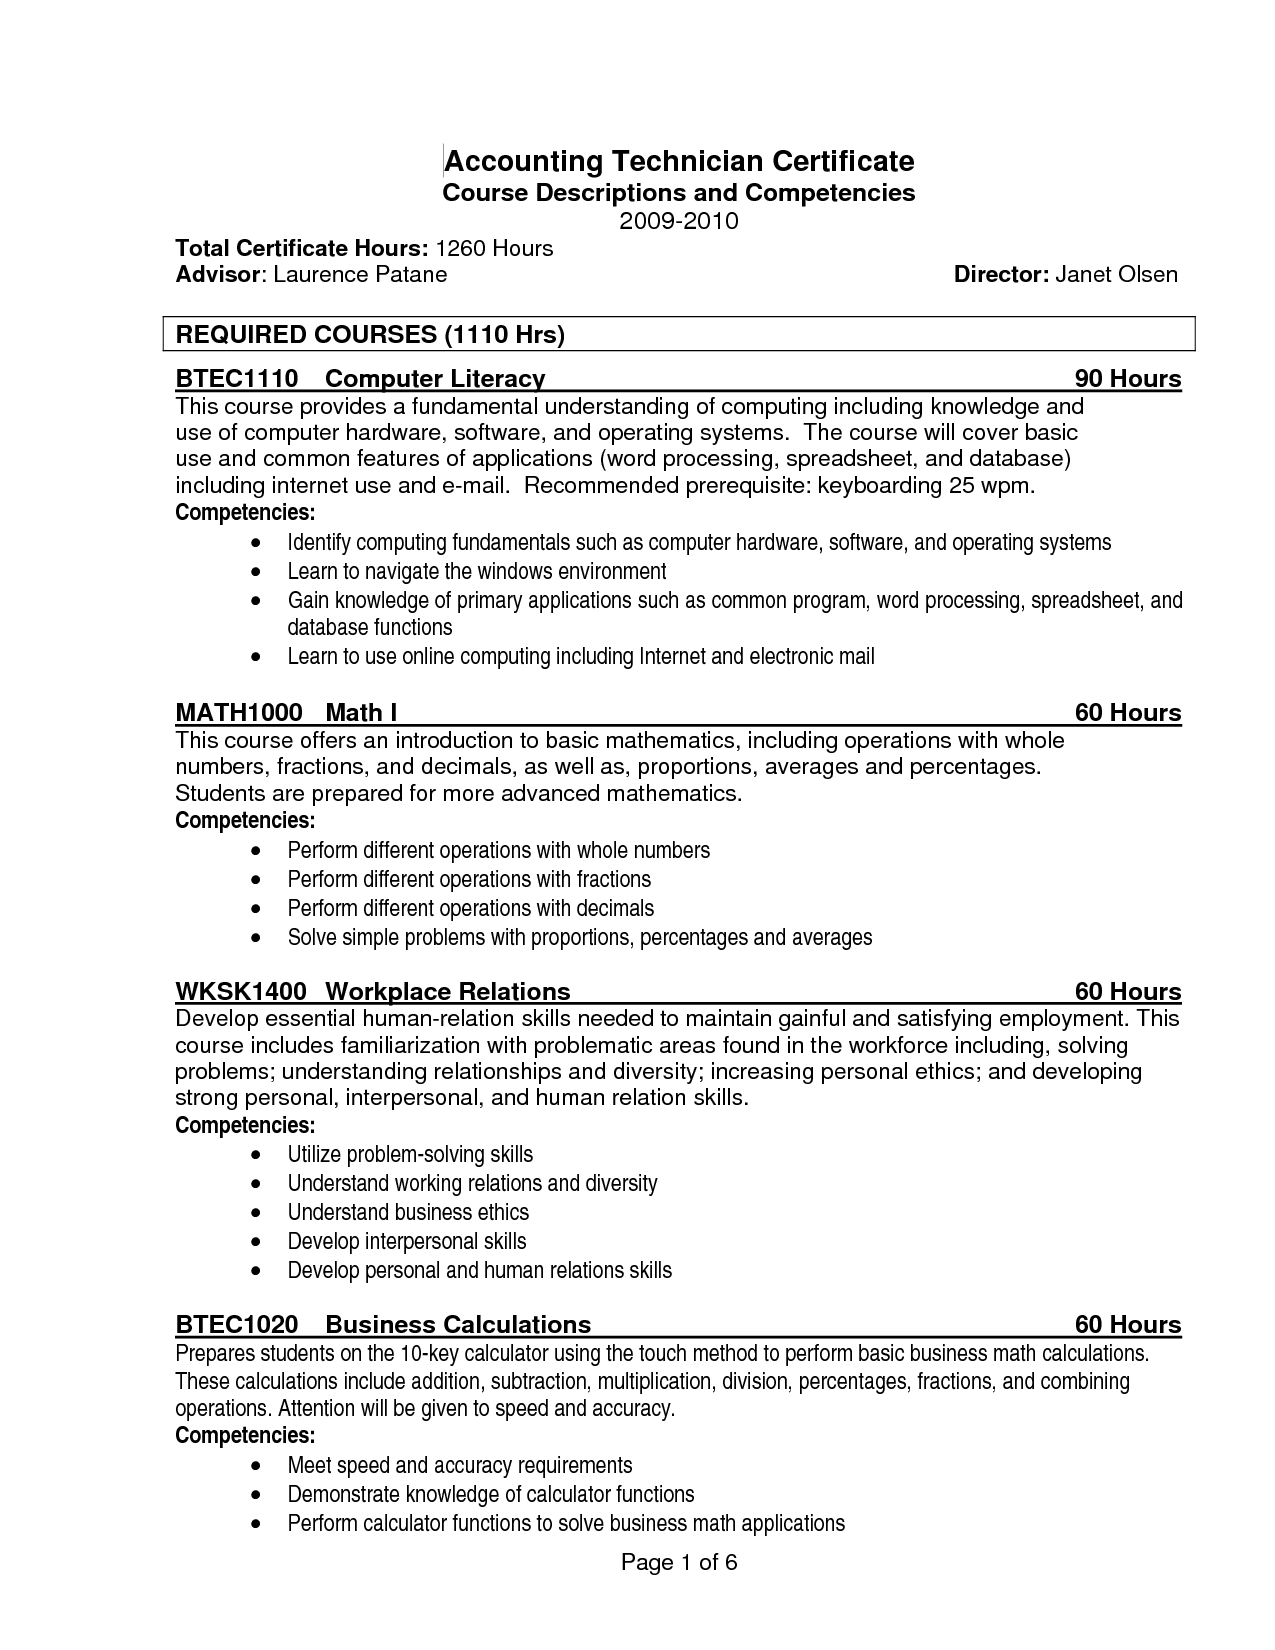 Resume Certification | Resume For Study